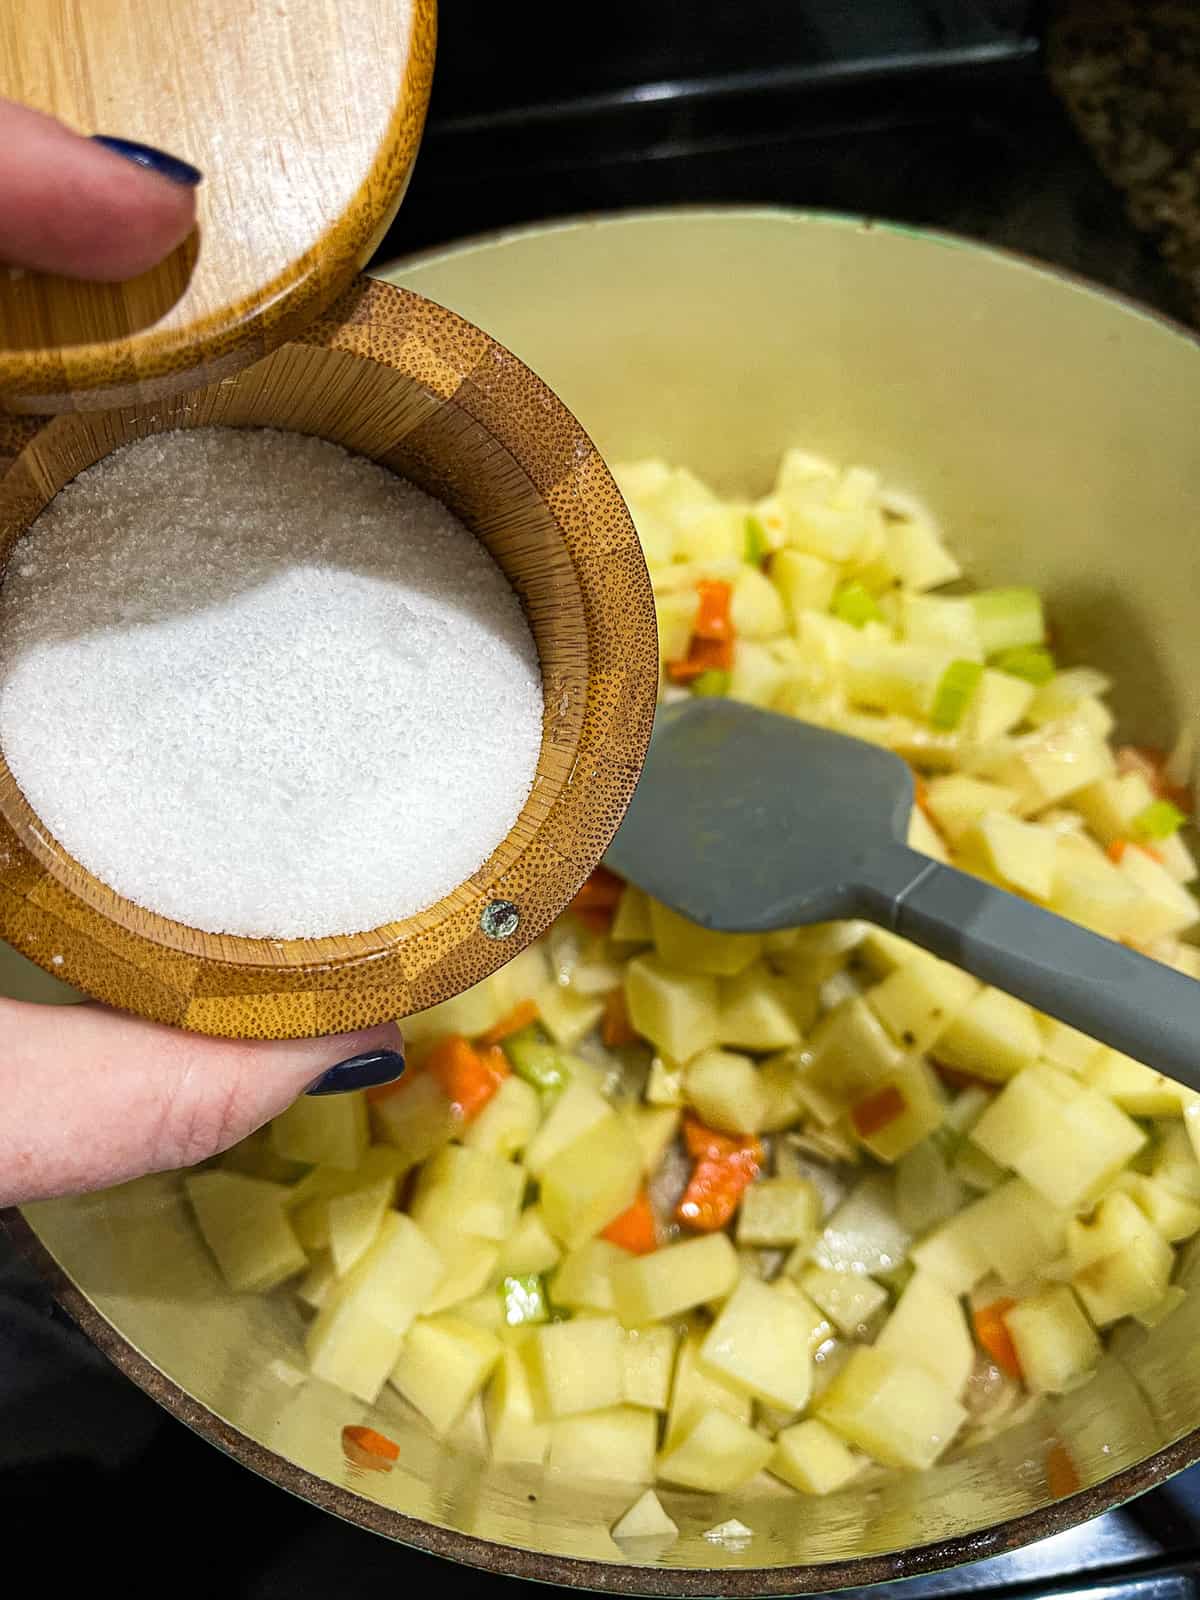 kosher salt for seasoning a layer of diced vegetables